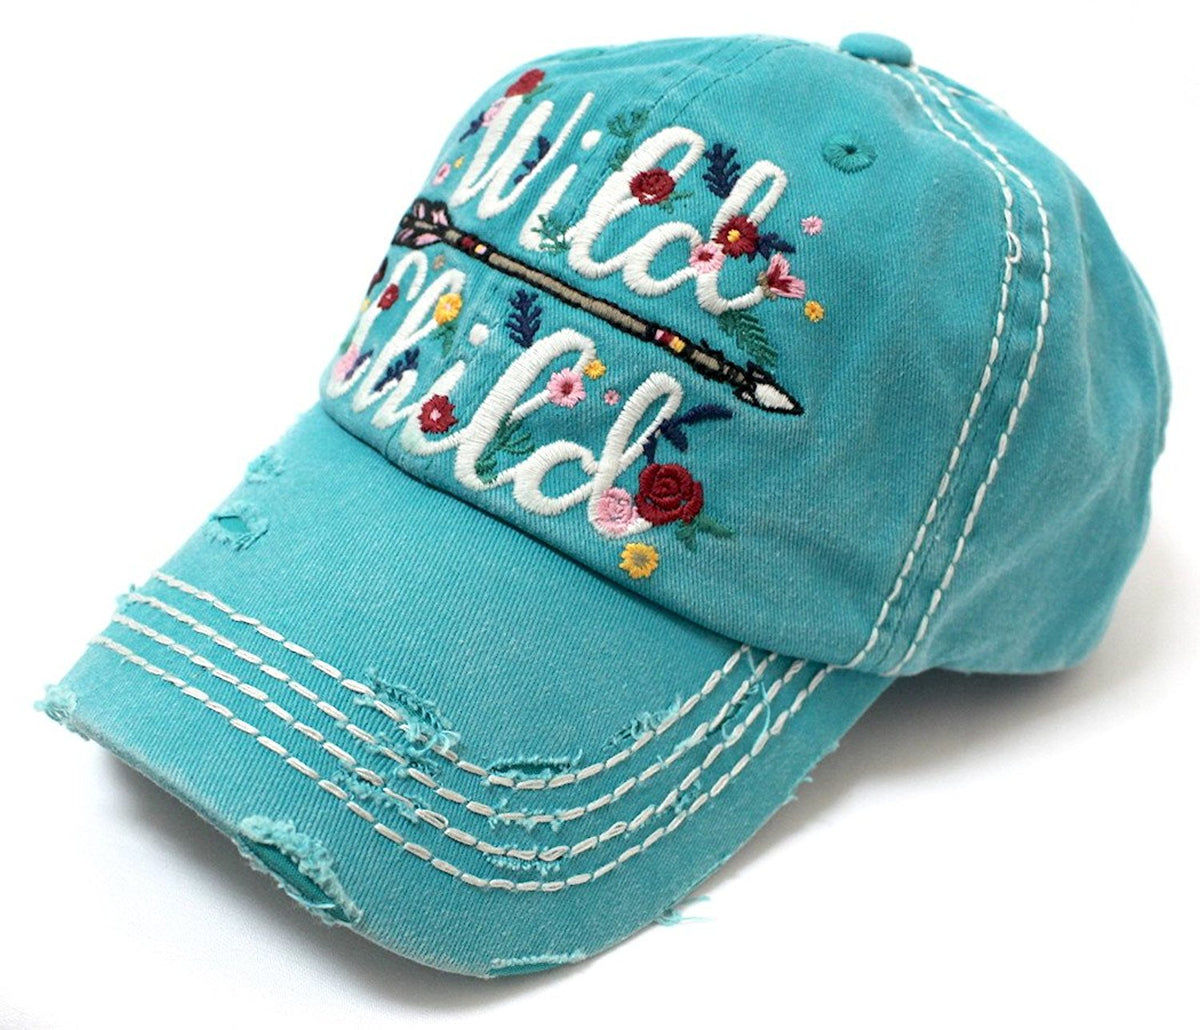 CAPS 'N VINTAGE New!! Turquoise Wild Child Floral Arrow Embroidery Cap - Caps 'N Vintage 